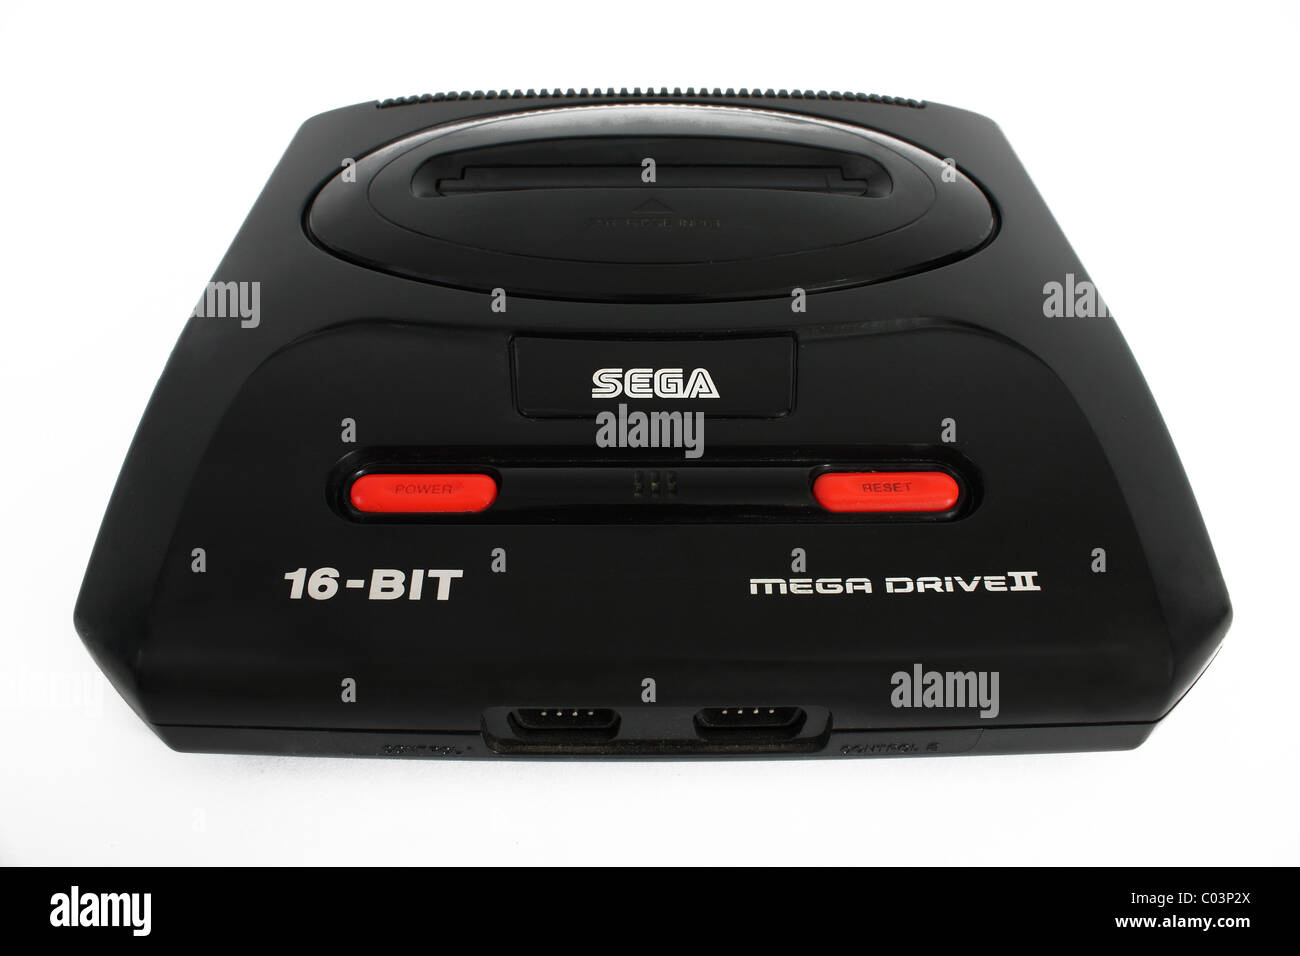 Sega mega drive hi-res stock photography and images - Alamy